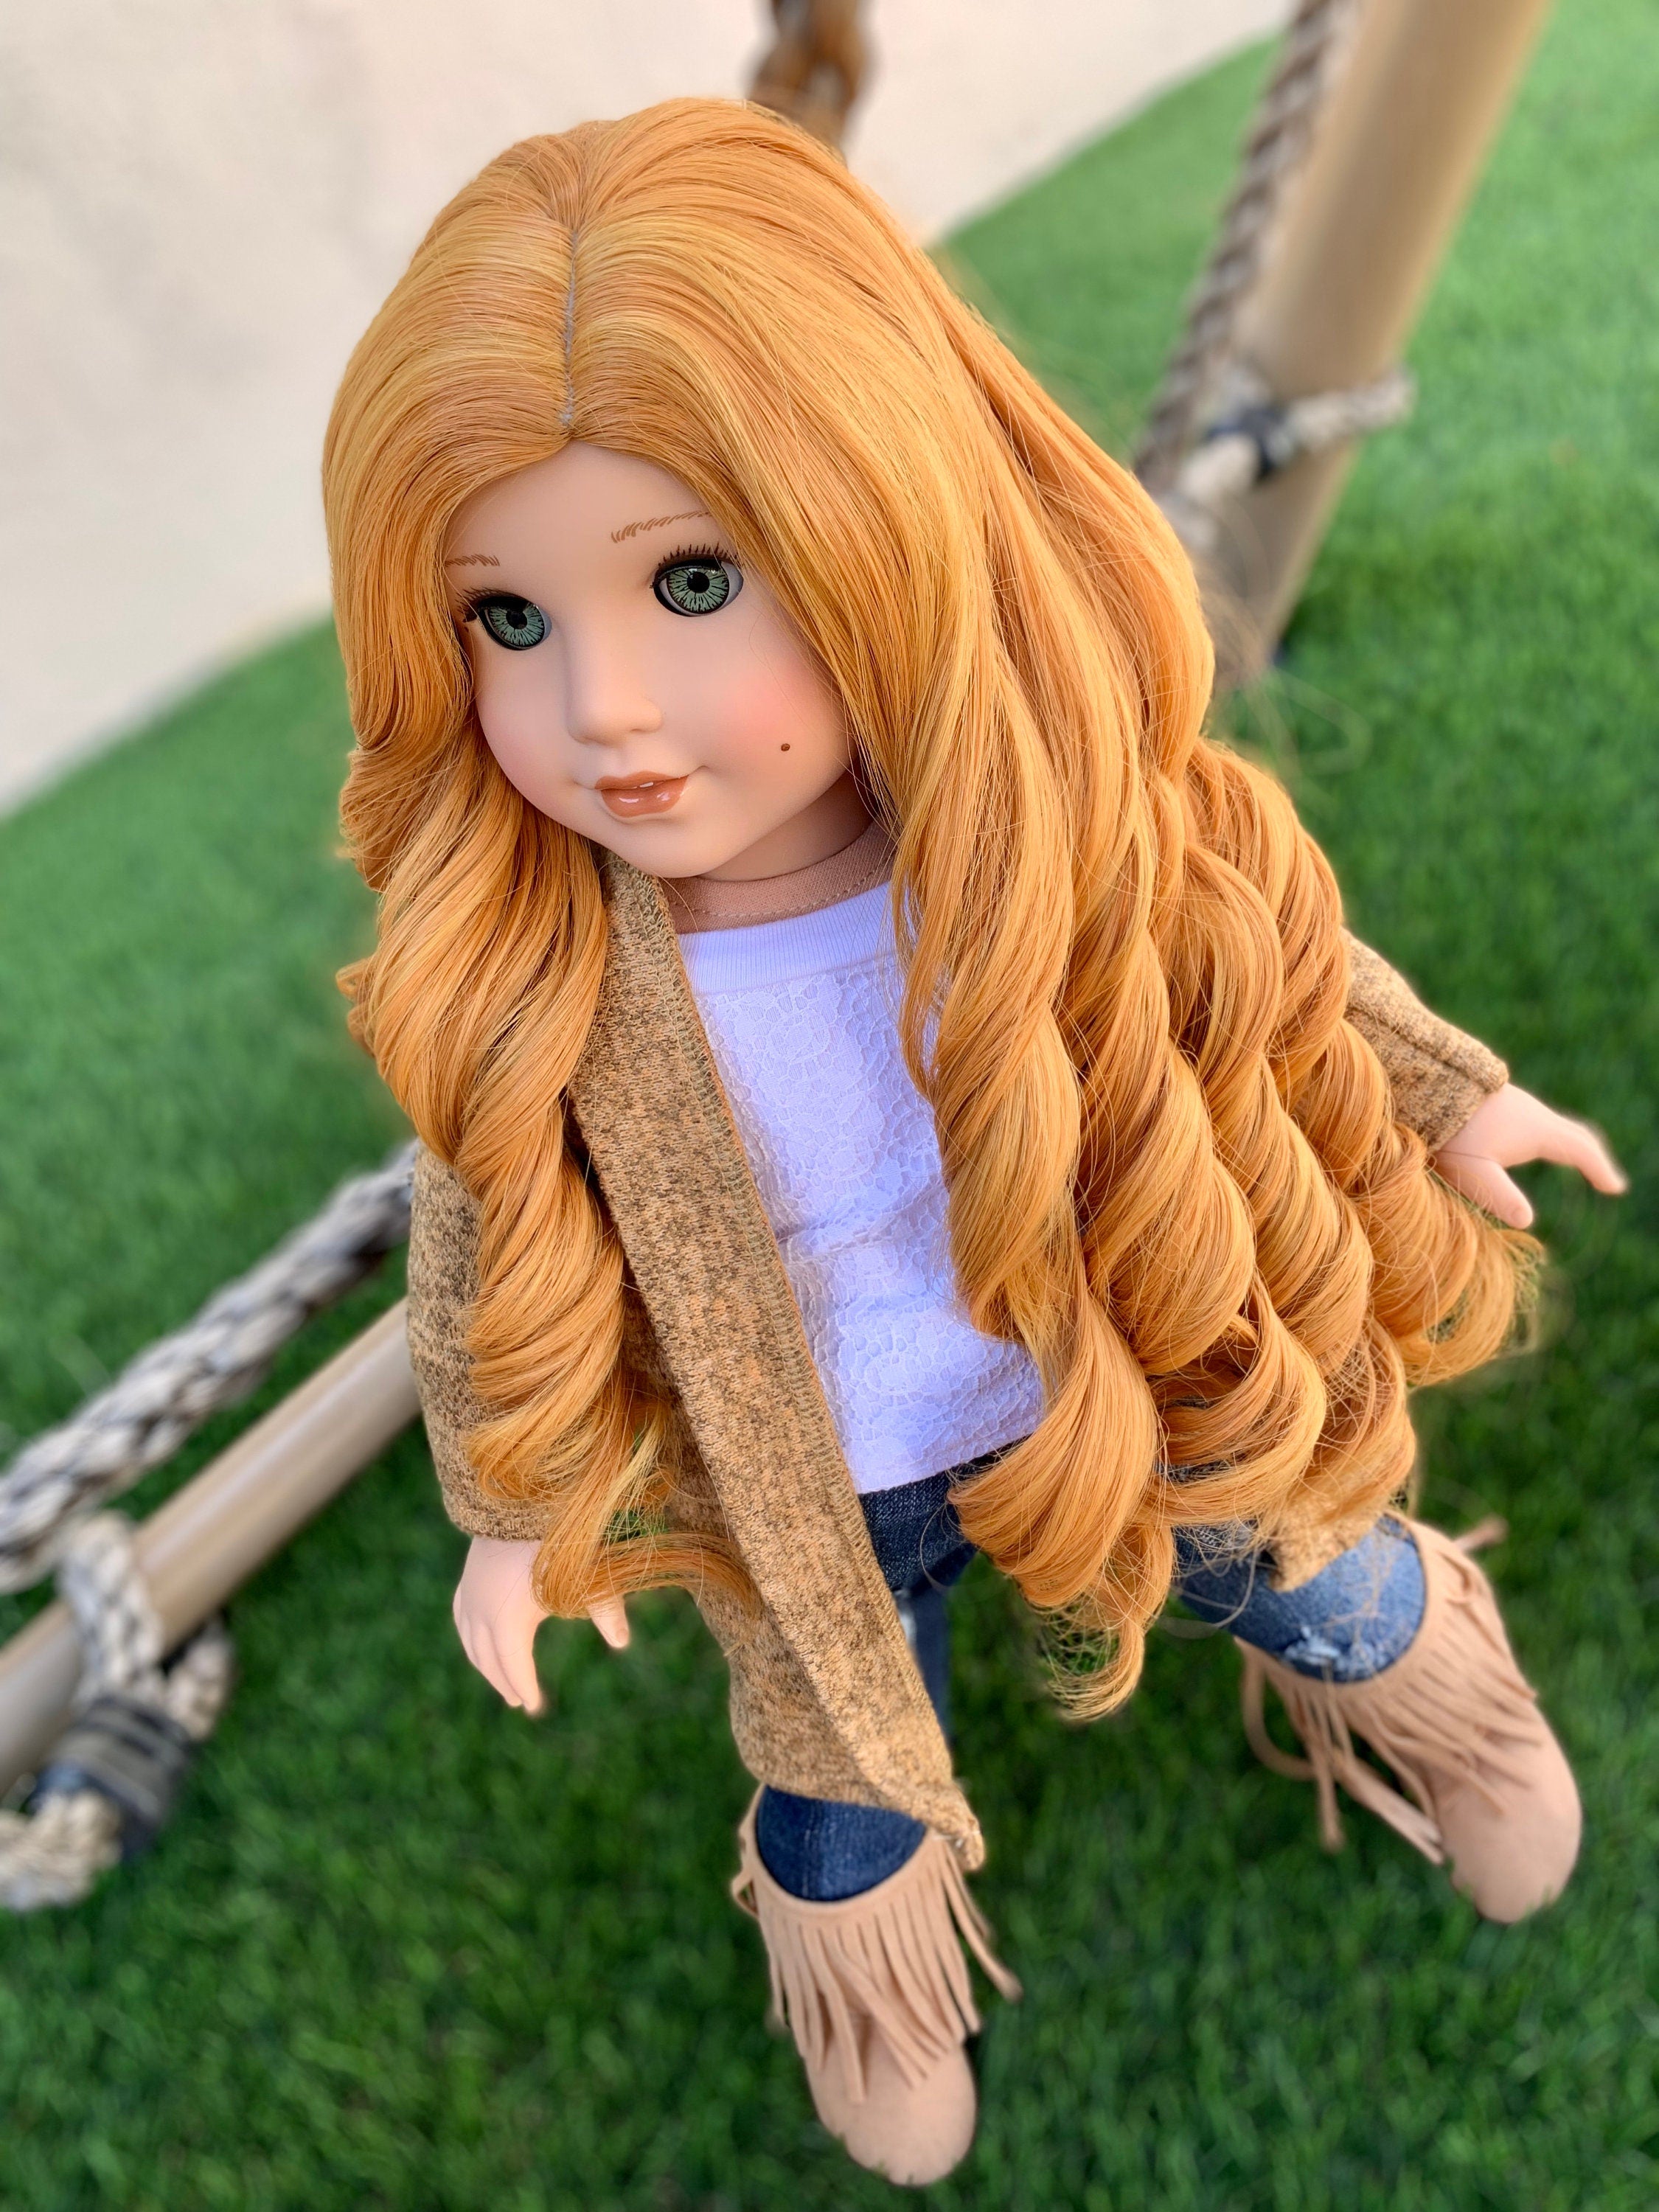 Custom doll wig for 18" American Girl Dolls - Heat Safe - Tangle Resistant - fits 10-11" head size of 18" dolls OG Blythe BJD Gotz carrot